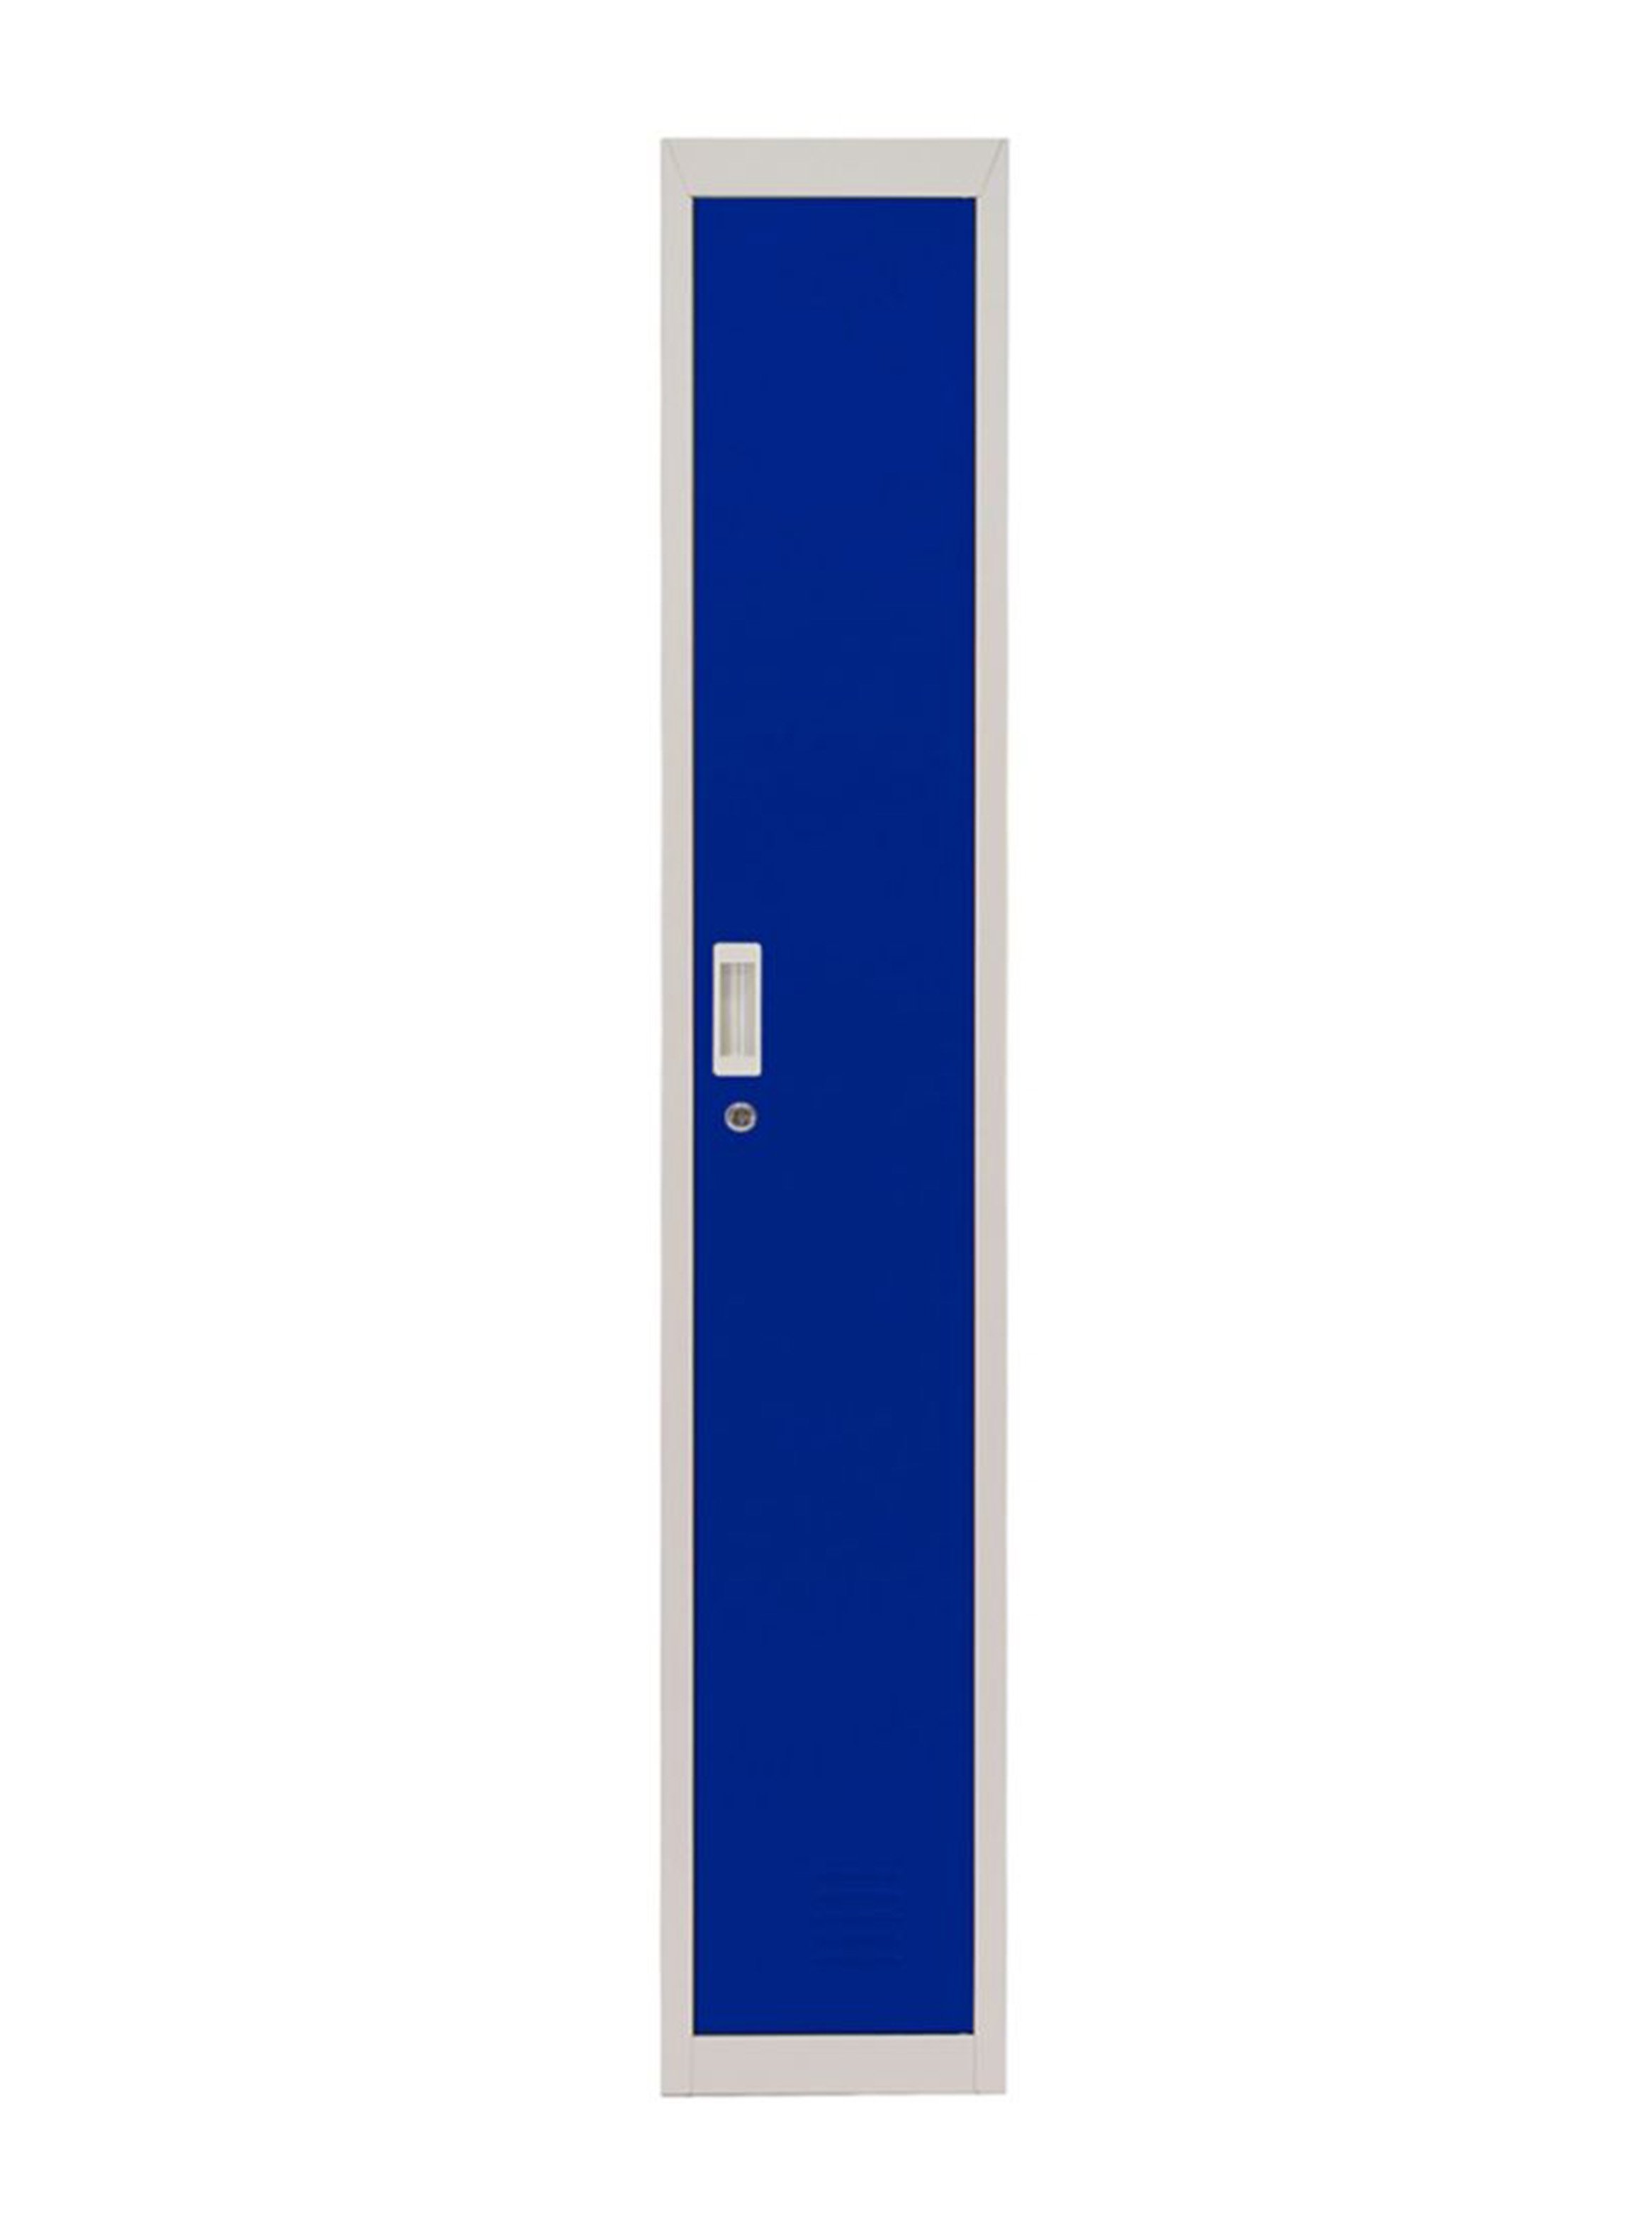 Locker Office Llaves Azul 1 Puerta 28x50x166 cm Maletek